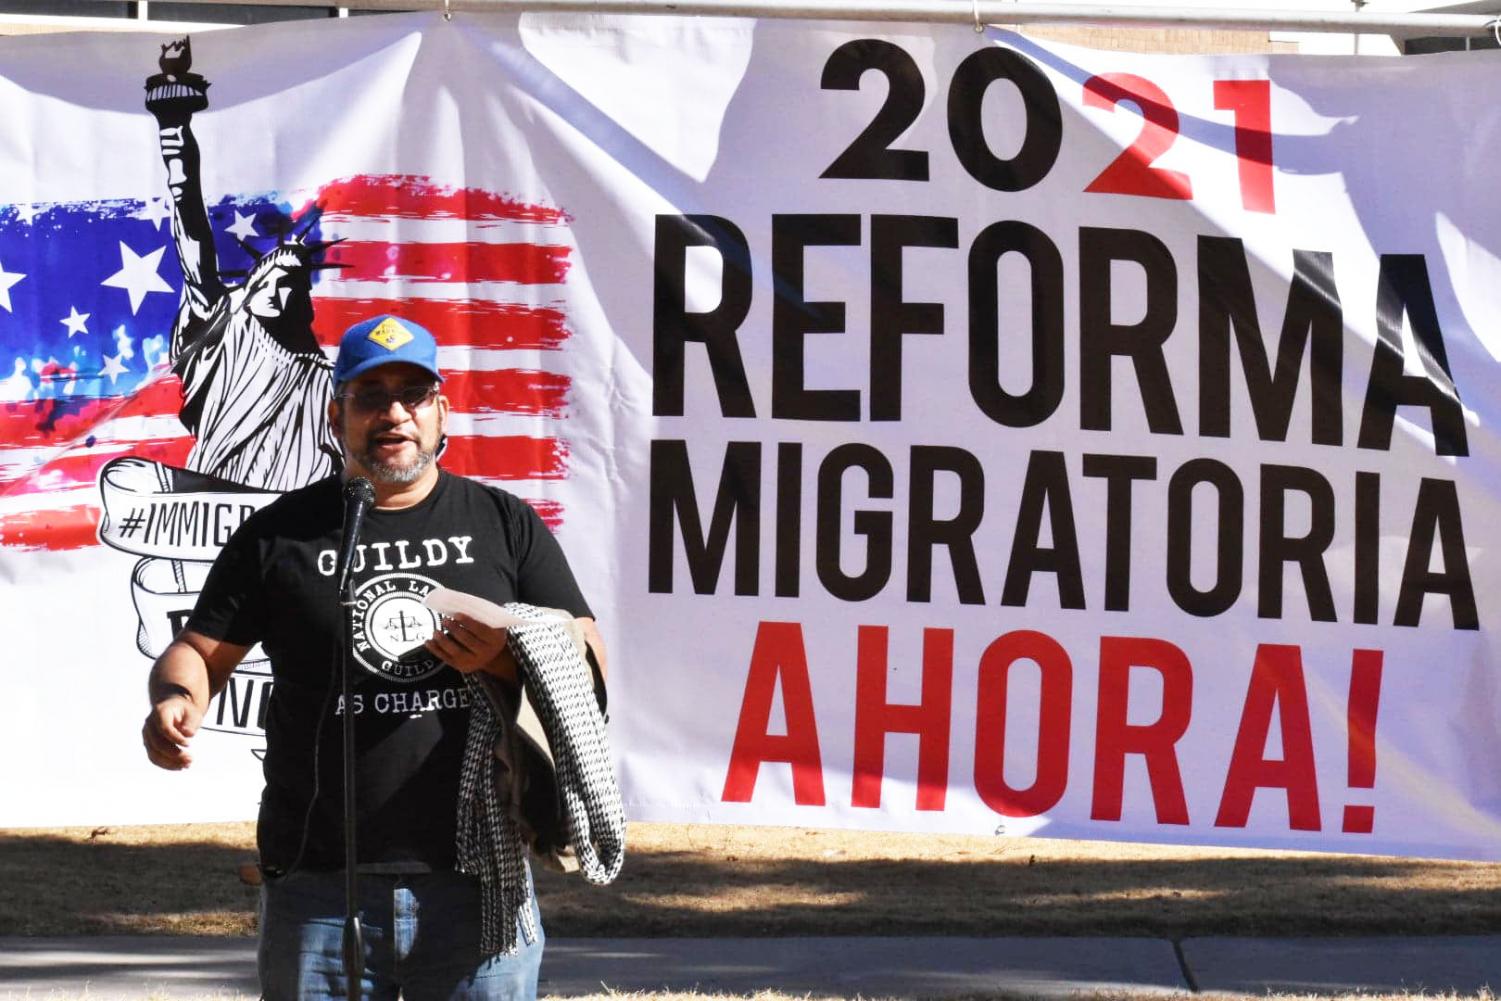 Immigration+advocates+organize+caravan+to+outline+demands+of+Biden+administration